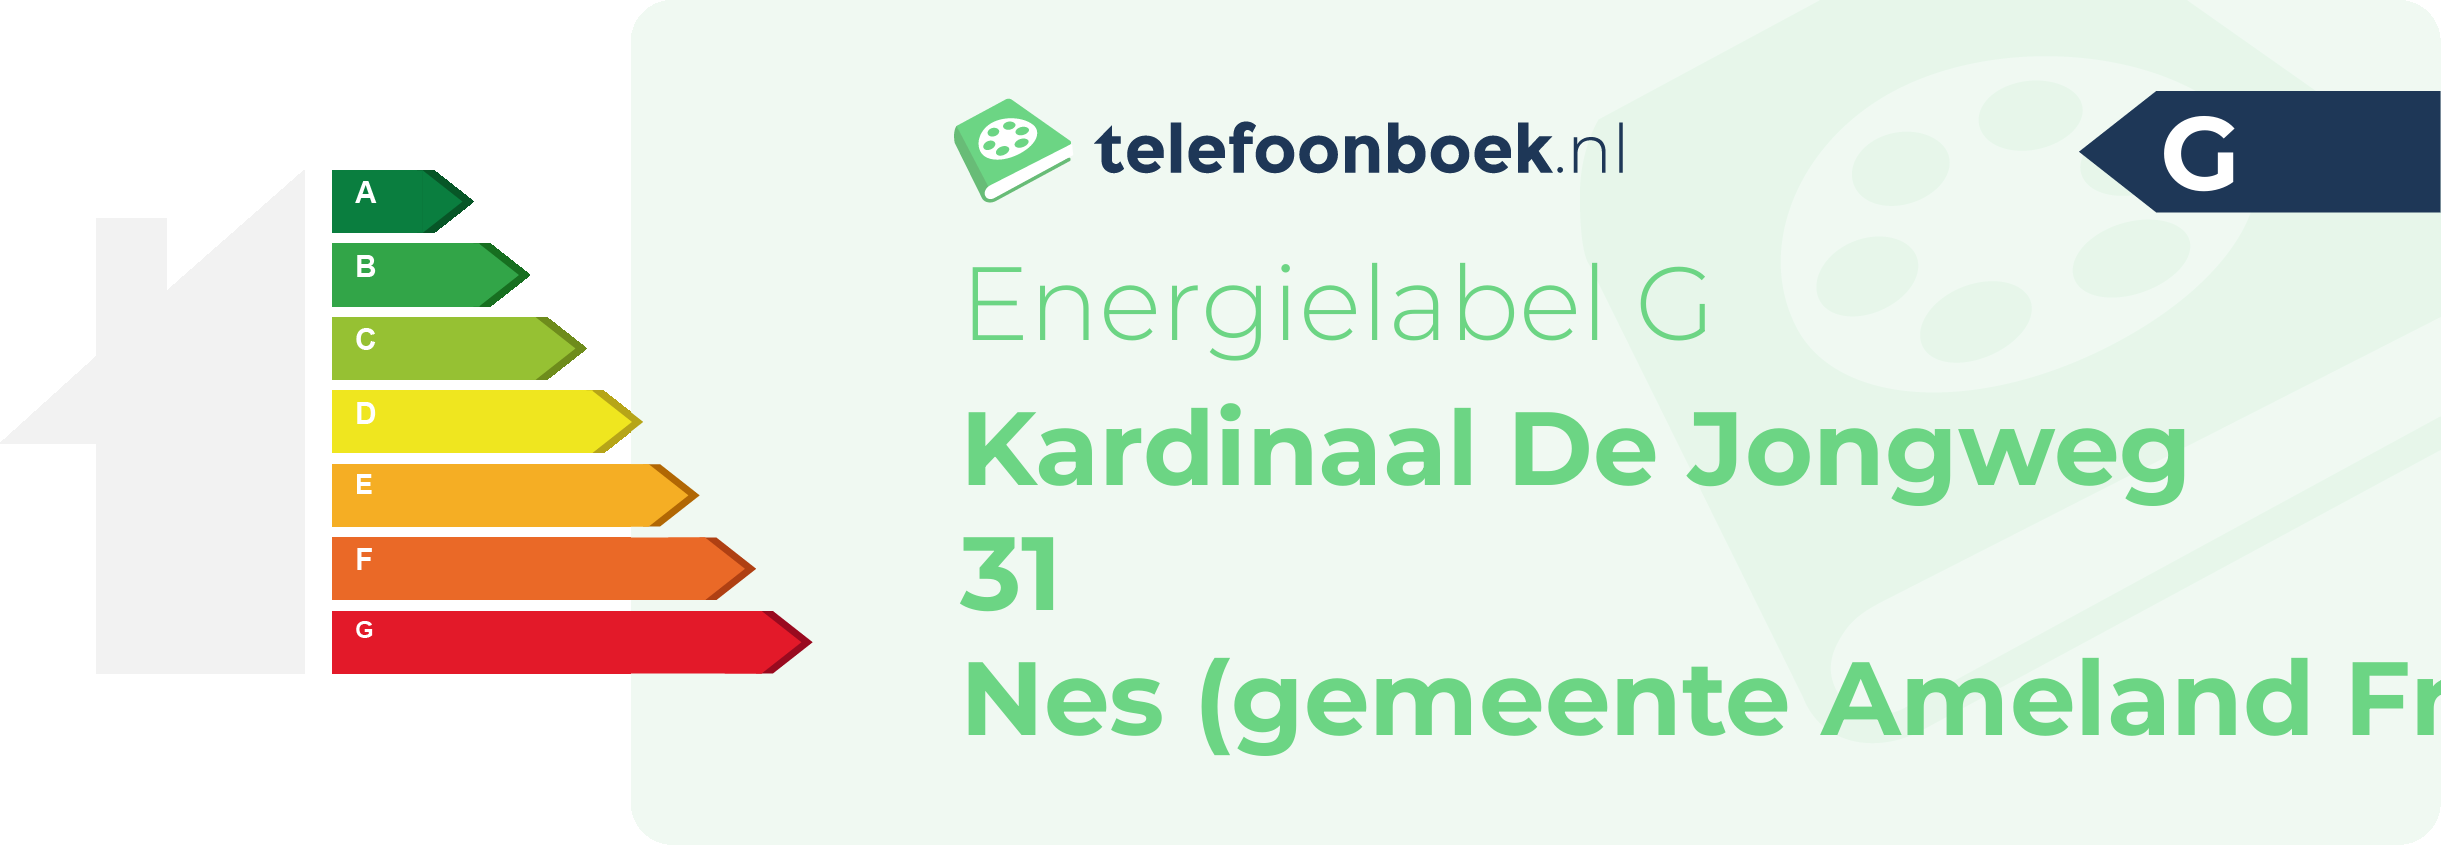 Energielabel Kardinaal De Jongweg 31 Nes (gemeente Ameland Friesland)